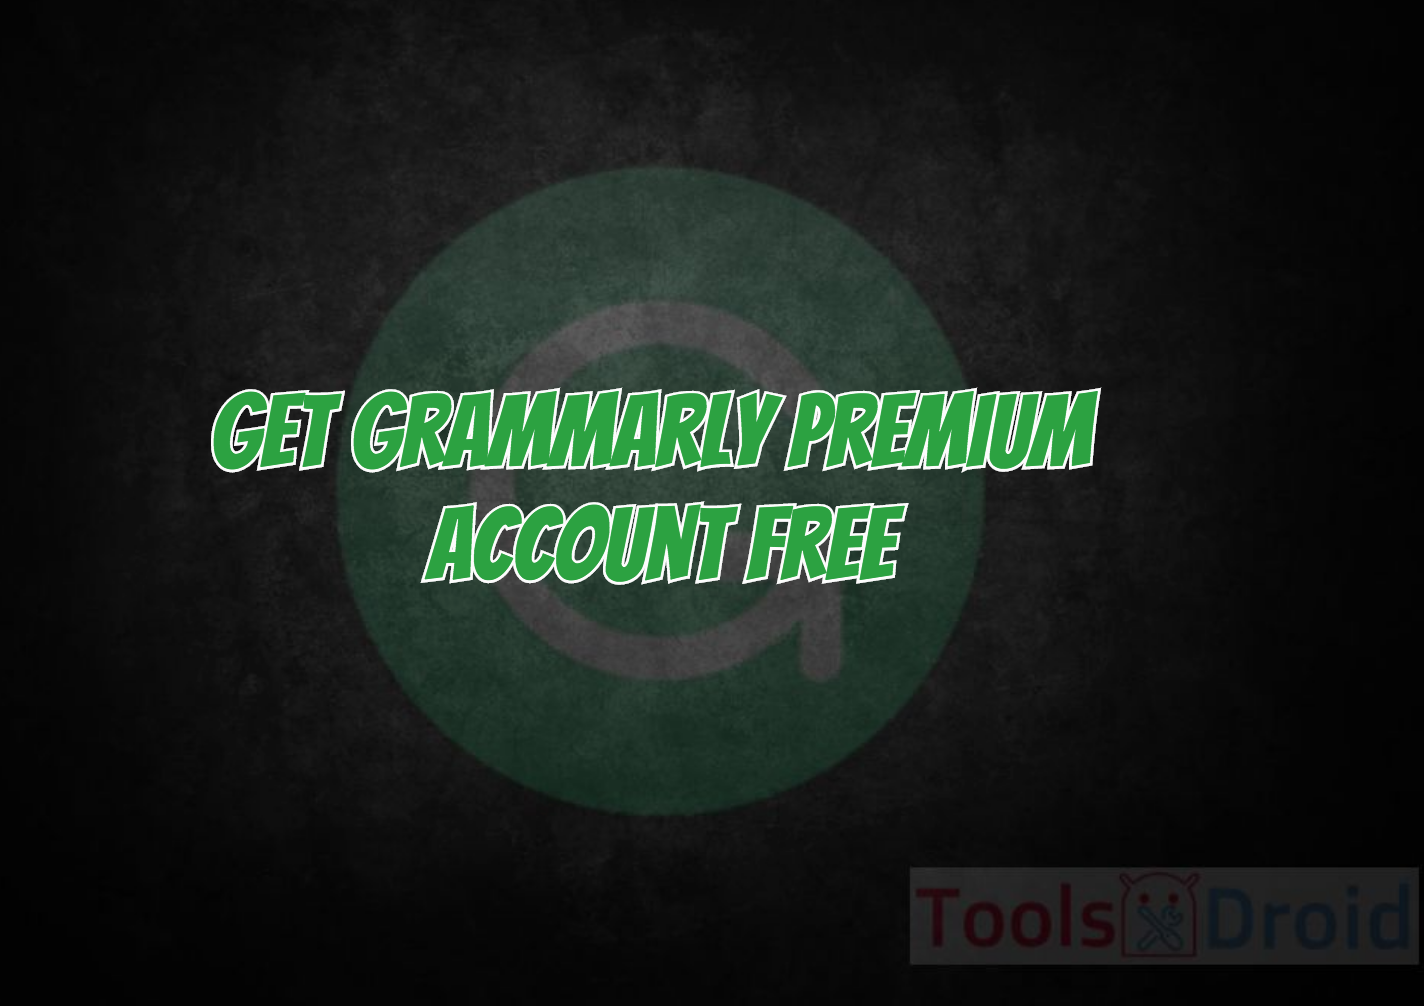 free grammarly account 2018